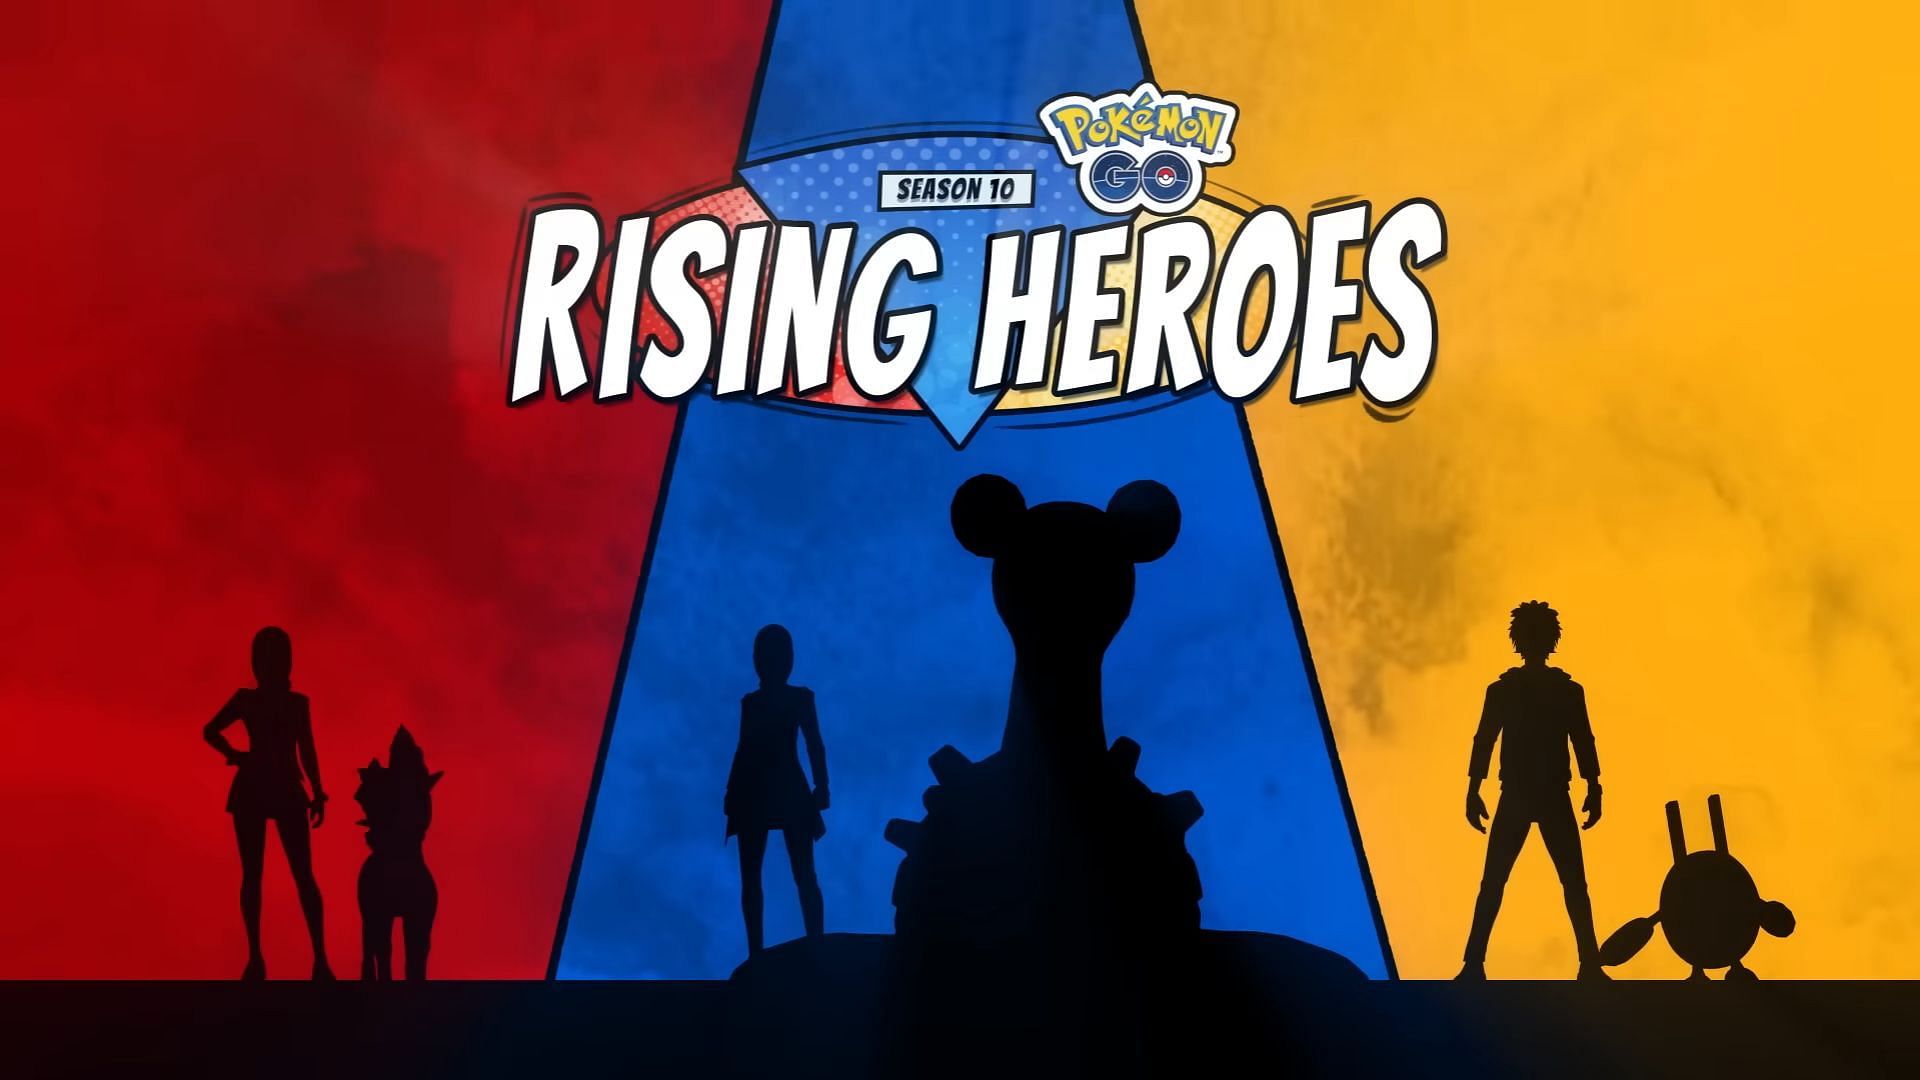 Season 10: Rising Heroes begins tomorrow (Image via Pokemon GO)